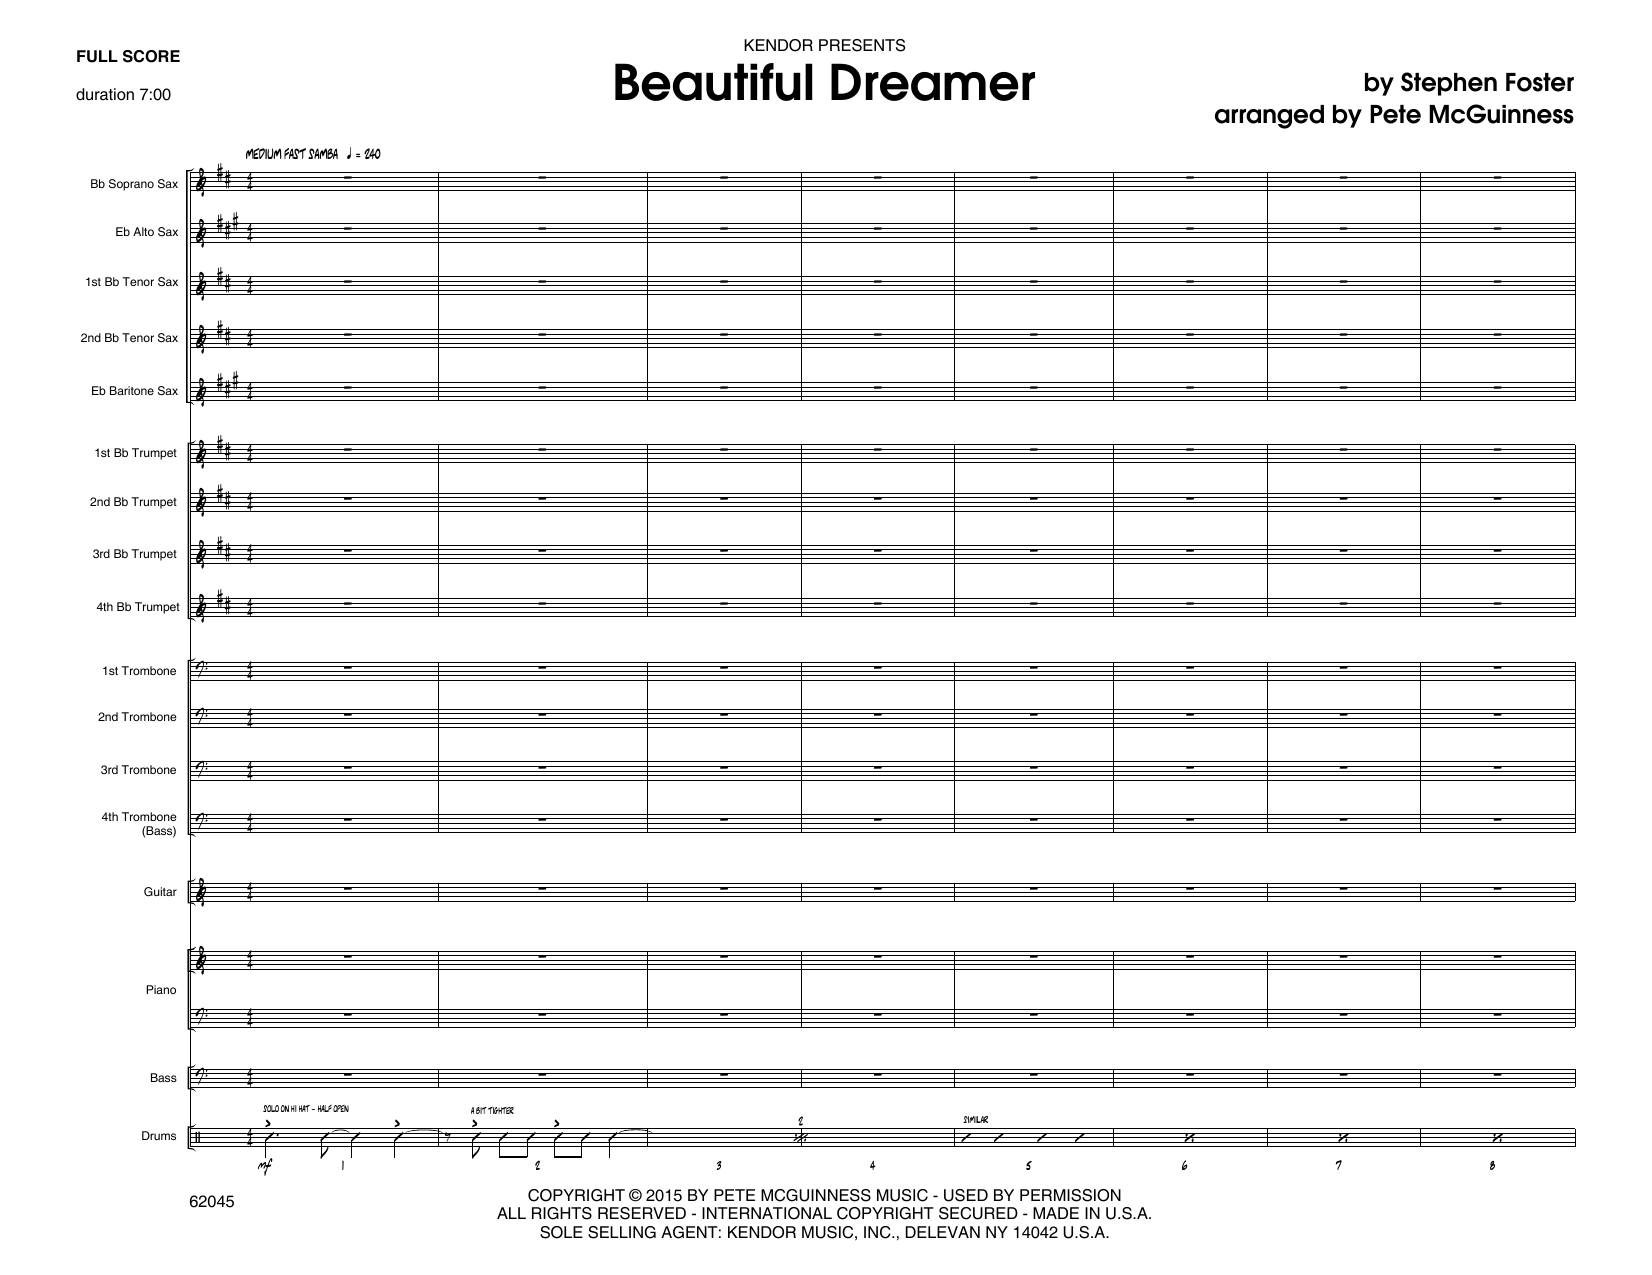 Download Stephen Foster Beautiful Dreamer - Full Score Sheet Music